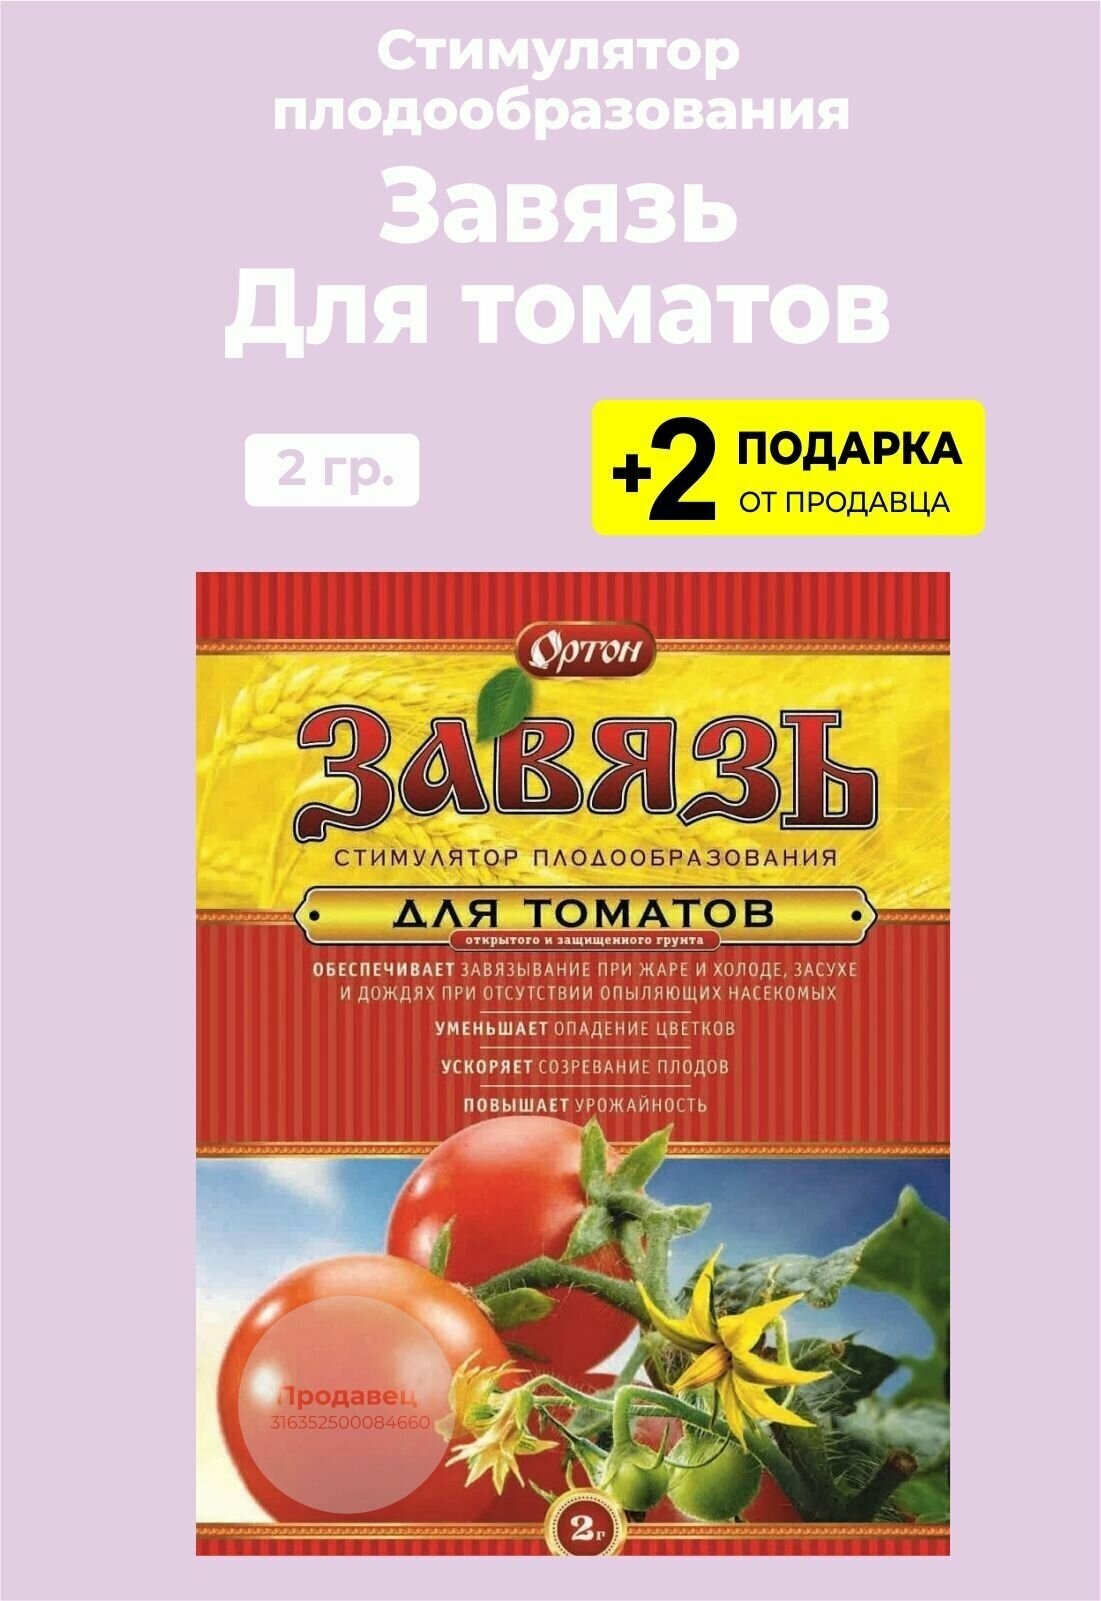 Стимулятор плодообразования Завязь "Для Томатов", 2 гр. + 2 Подарка